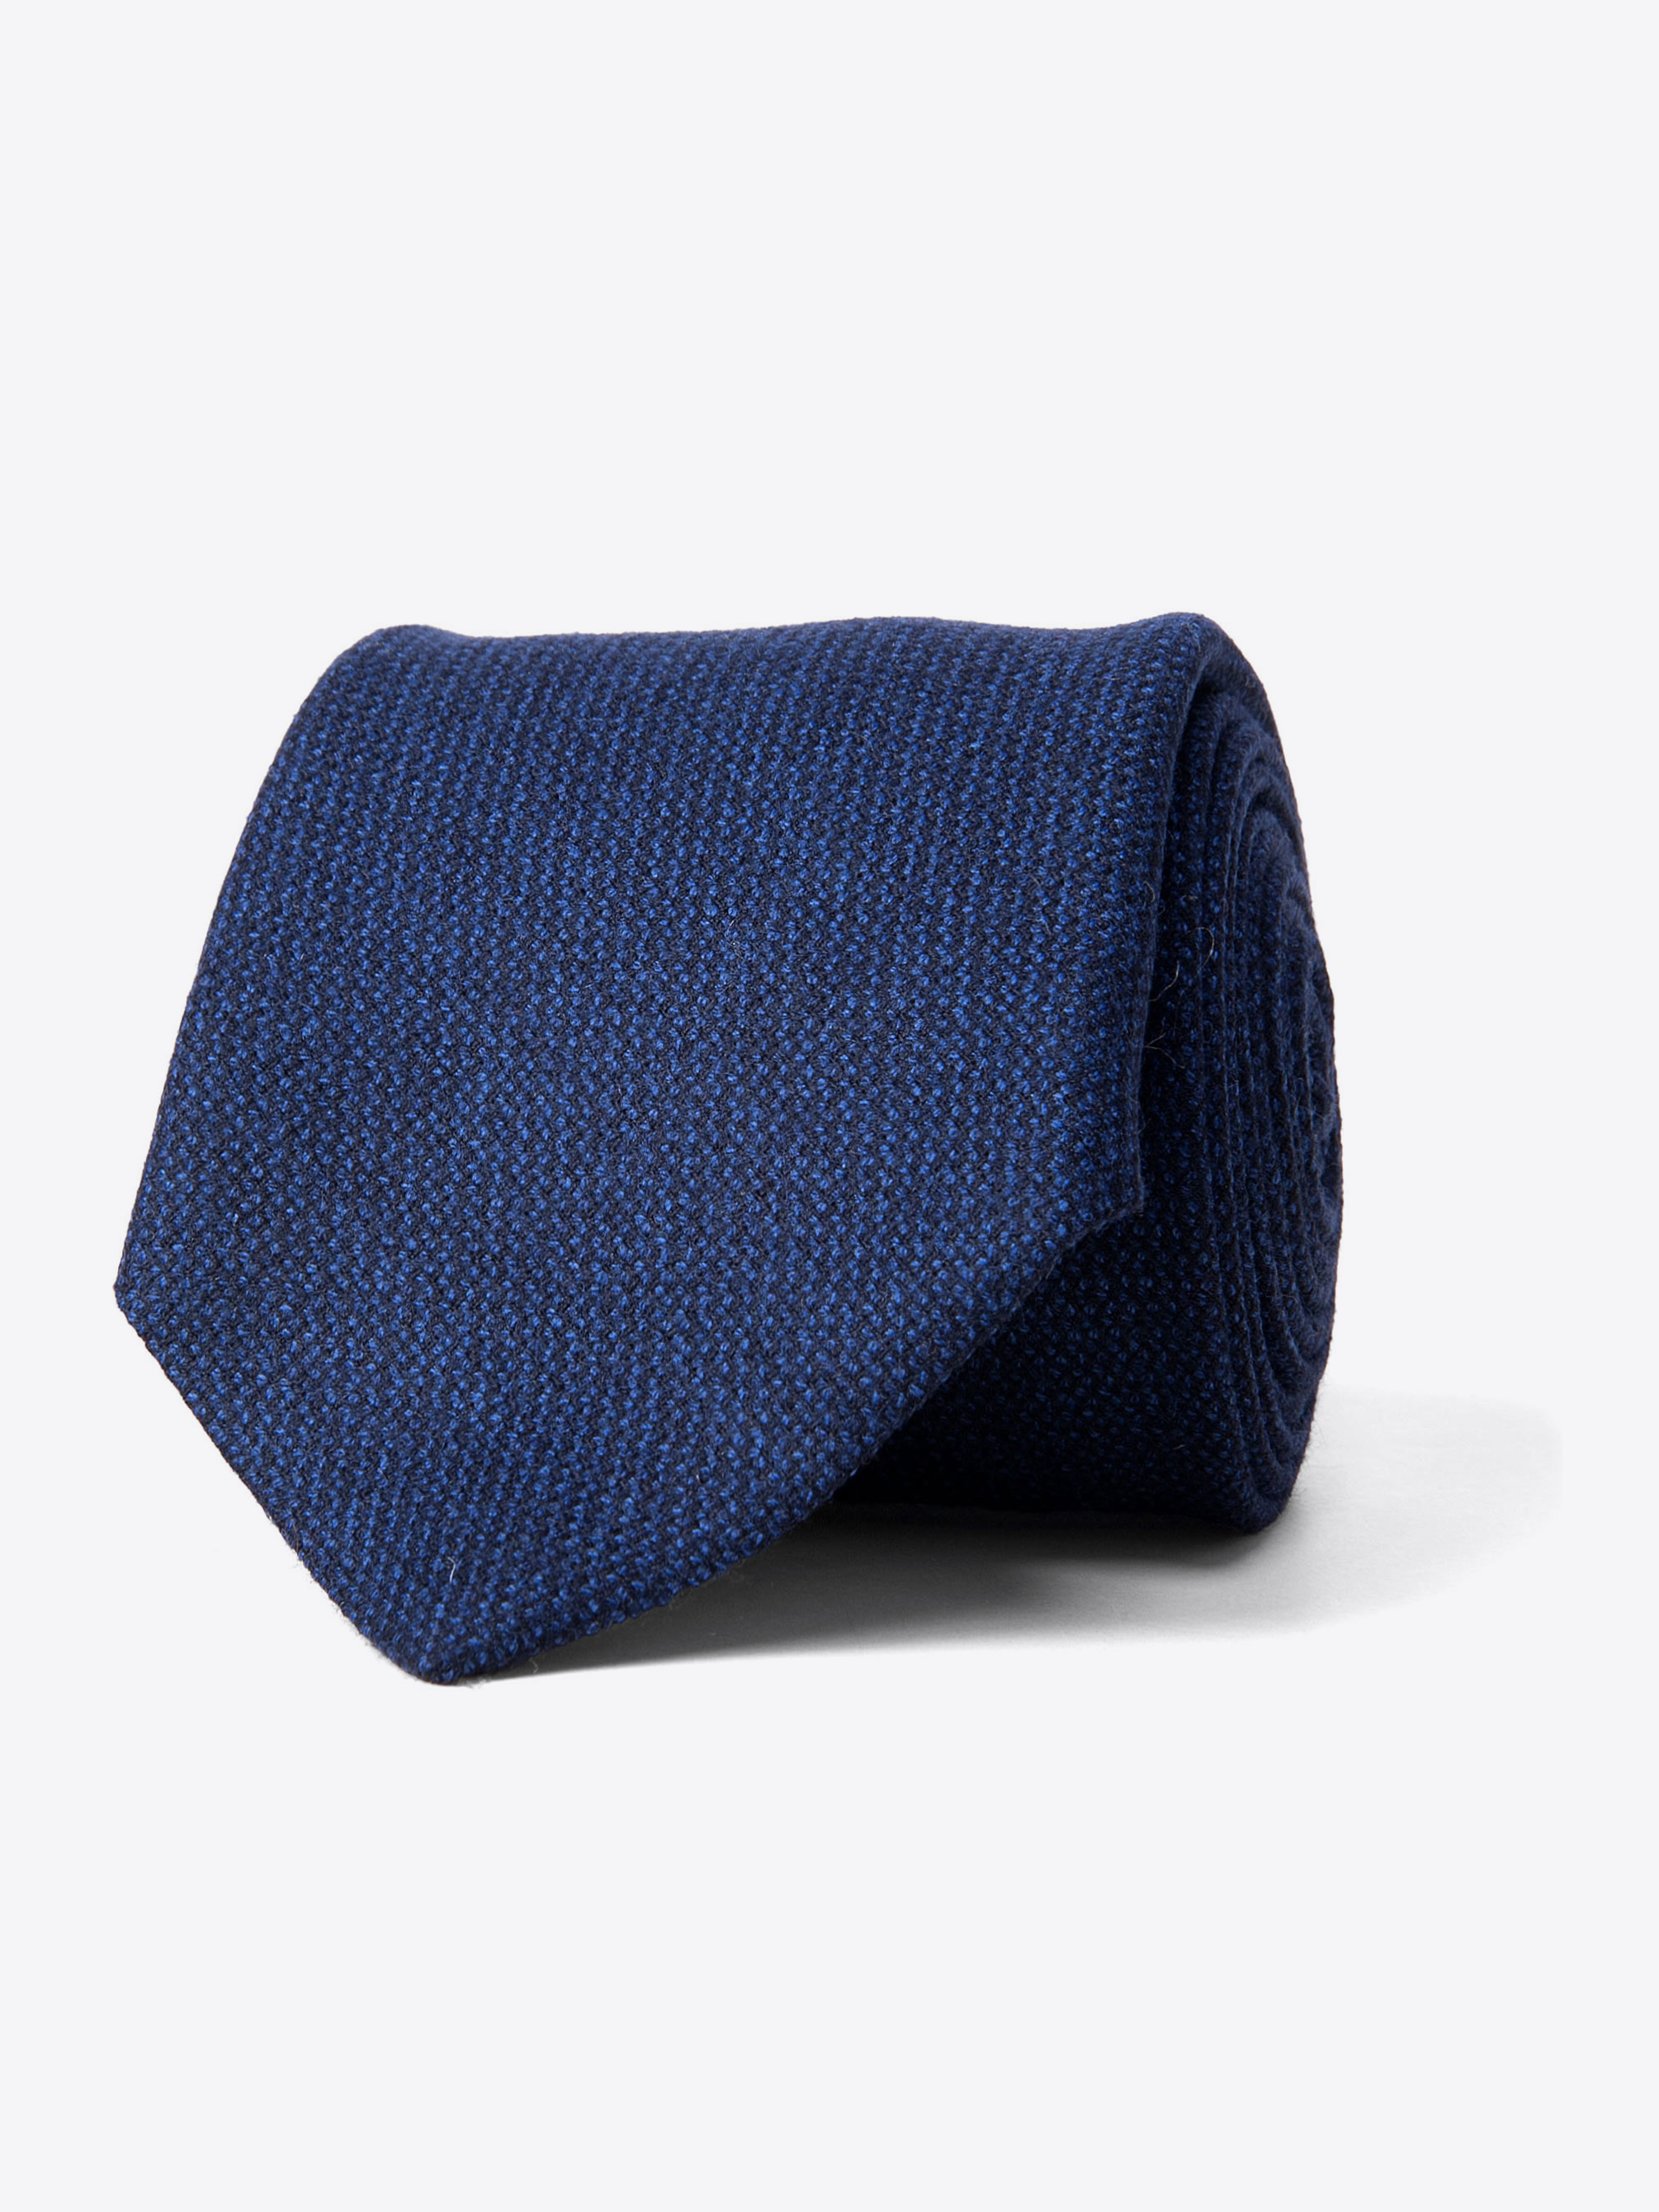 Zoom Image of Indigo Solid Hopsack Wool Tie